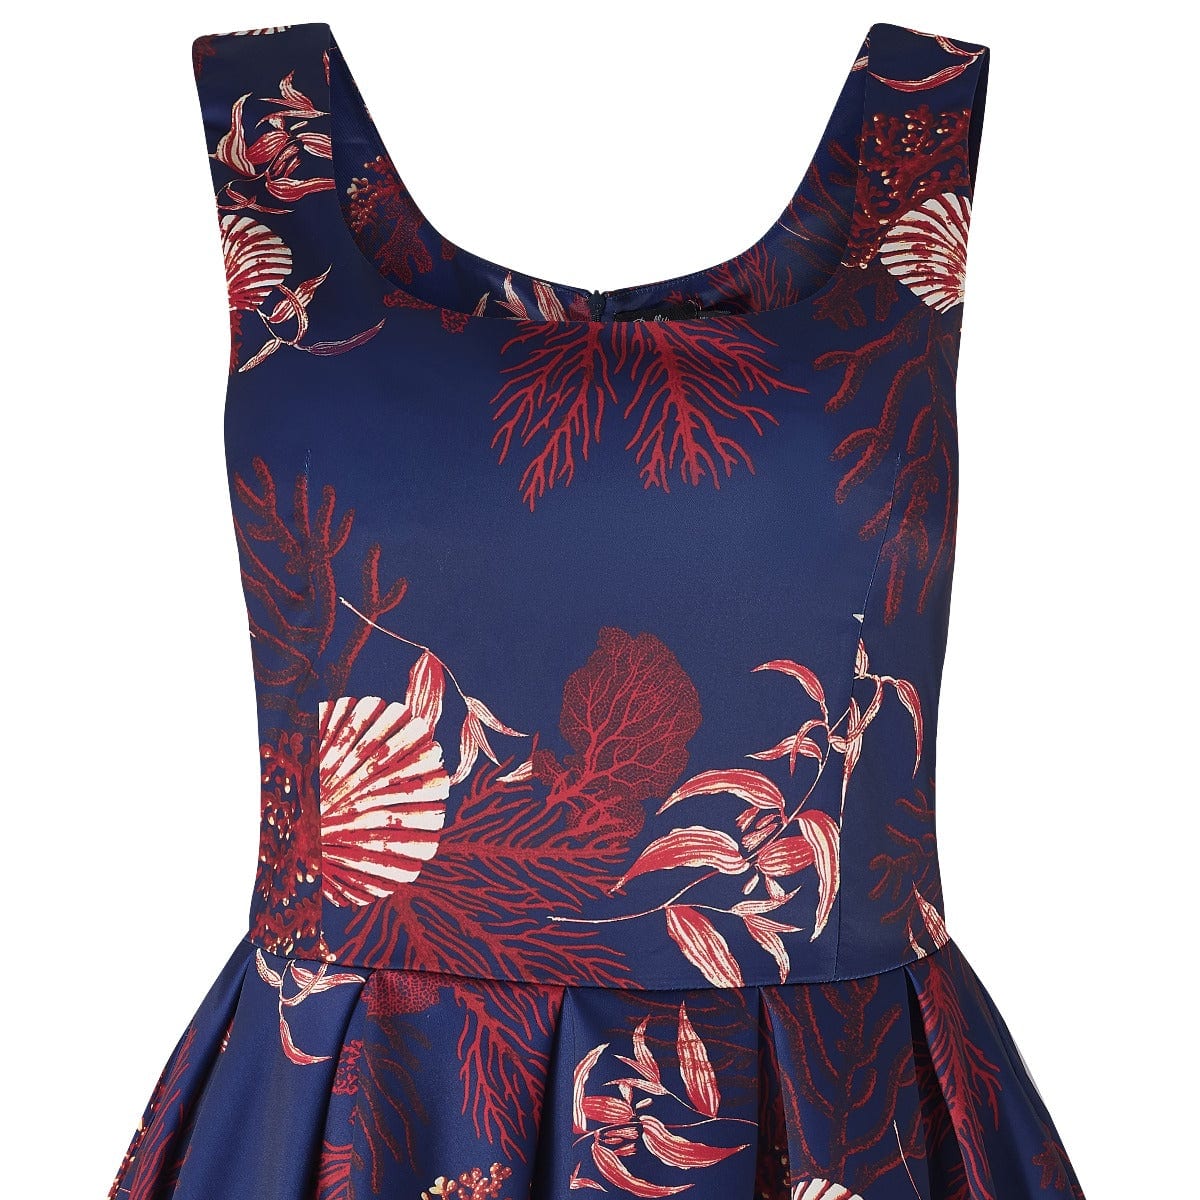 Amanda Scoop Neckline Dress Underwater Print Pink & Blue